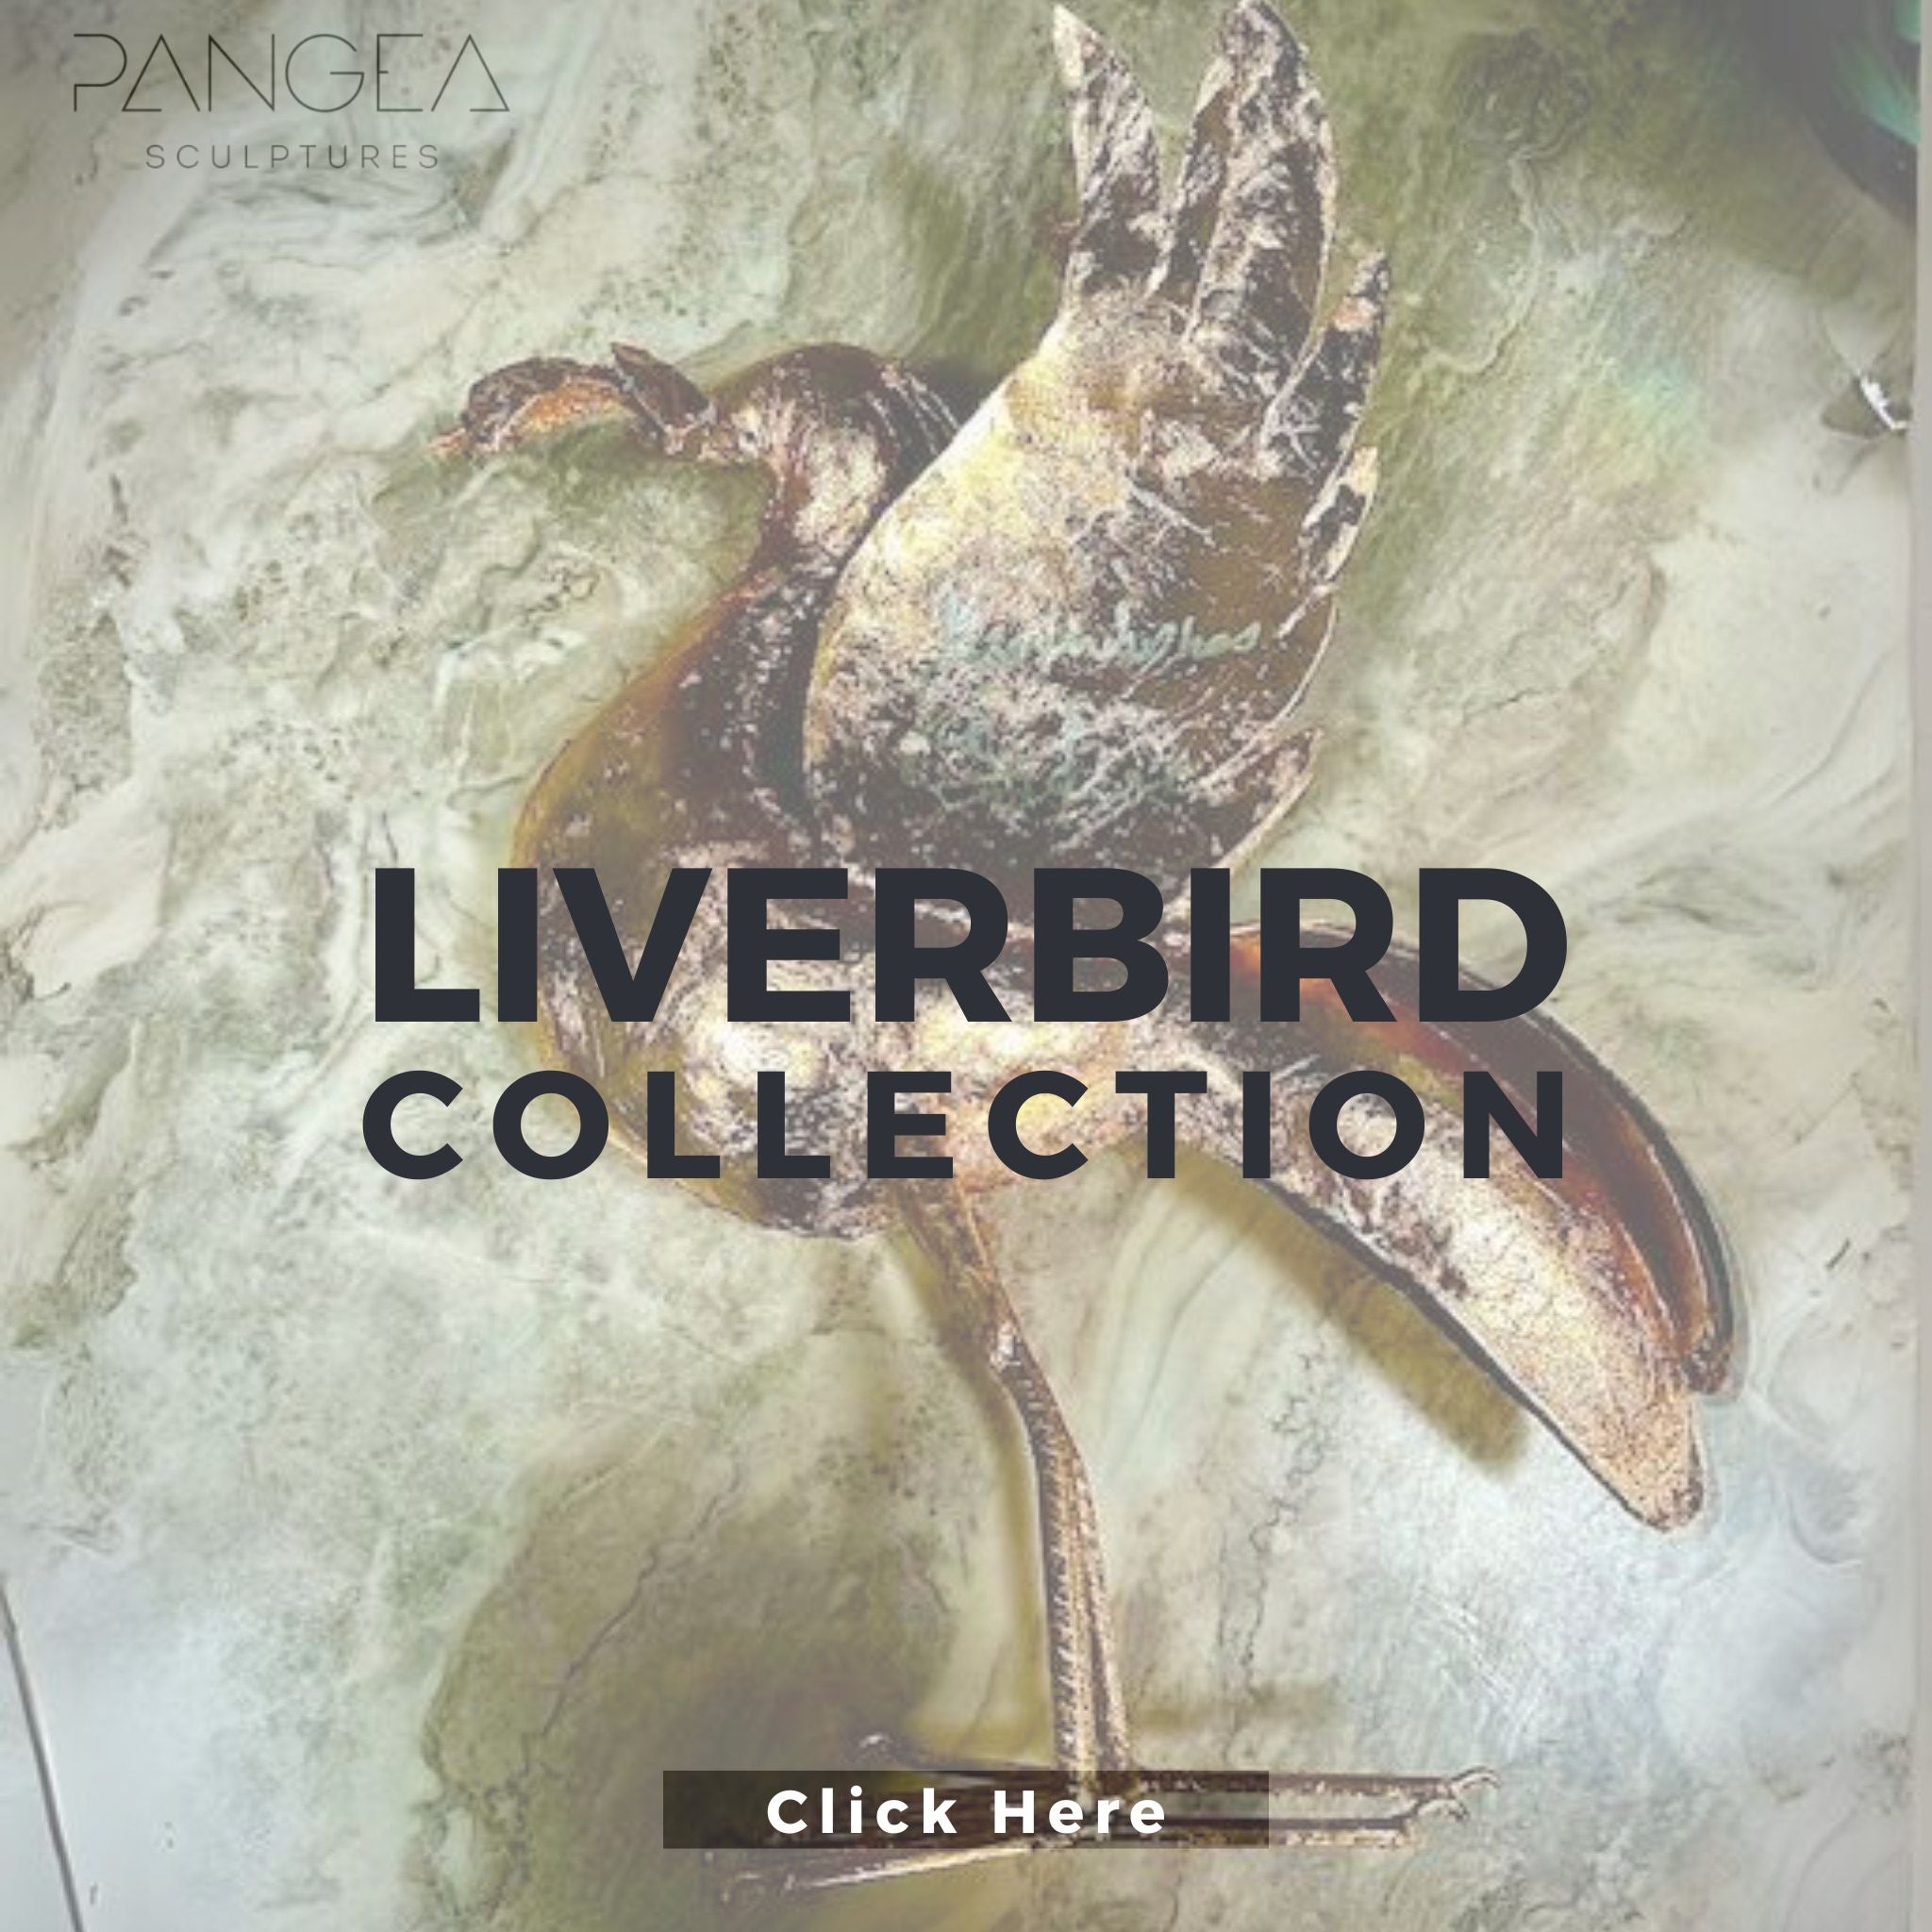 Liver bird Collection - Pangea Sculptures